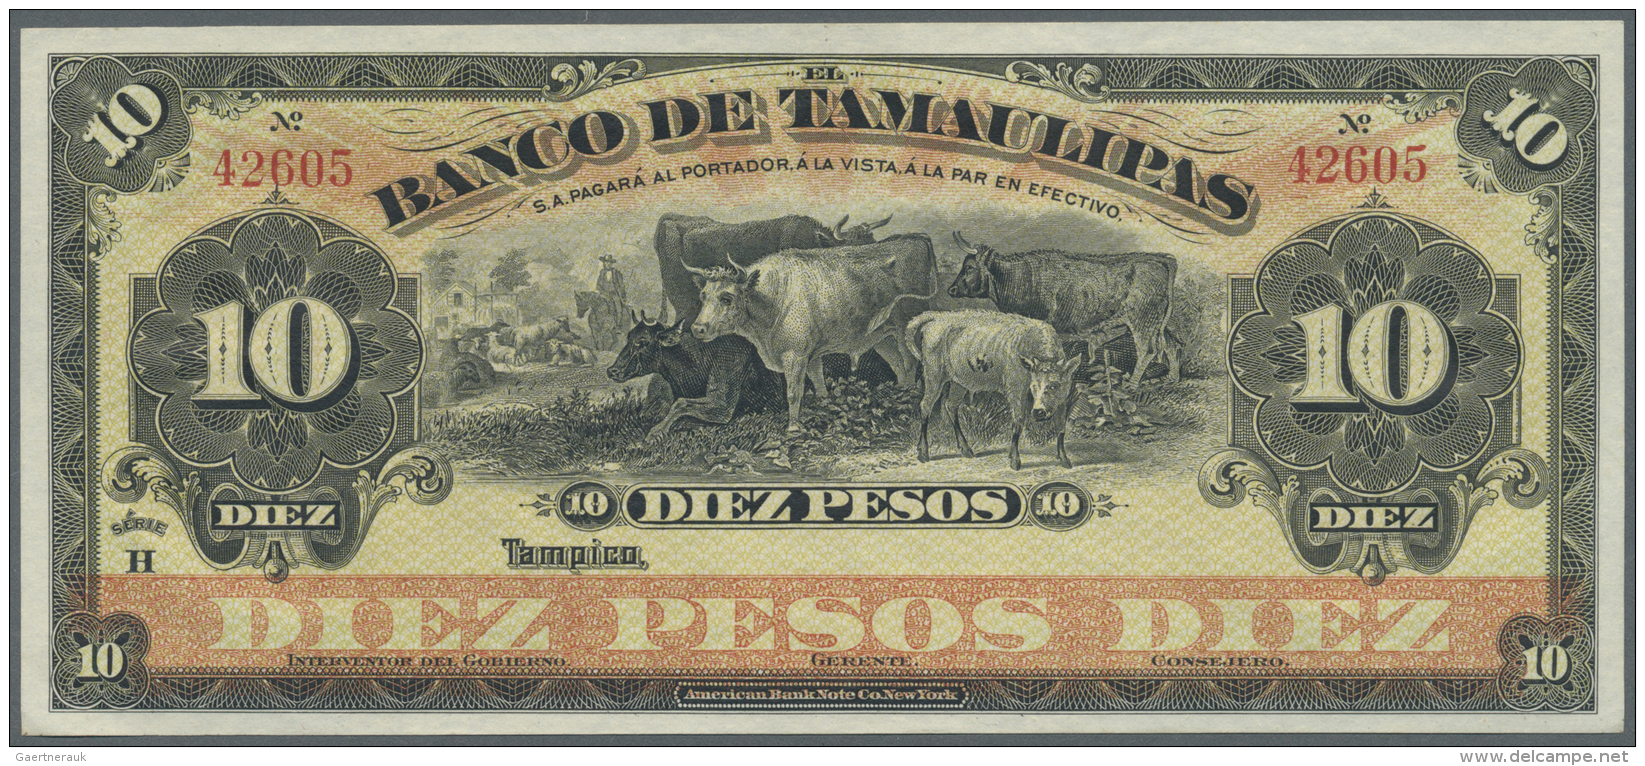 Mexico: El Banco De Tamaulipas 10 Pesos ND Remainder P. S430r, Very Minor Corner Bend, Otherwise Perfect, Condition: AUN - Messico